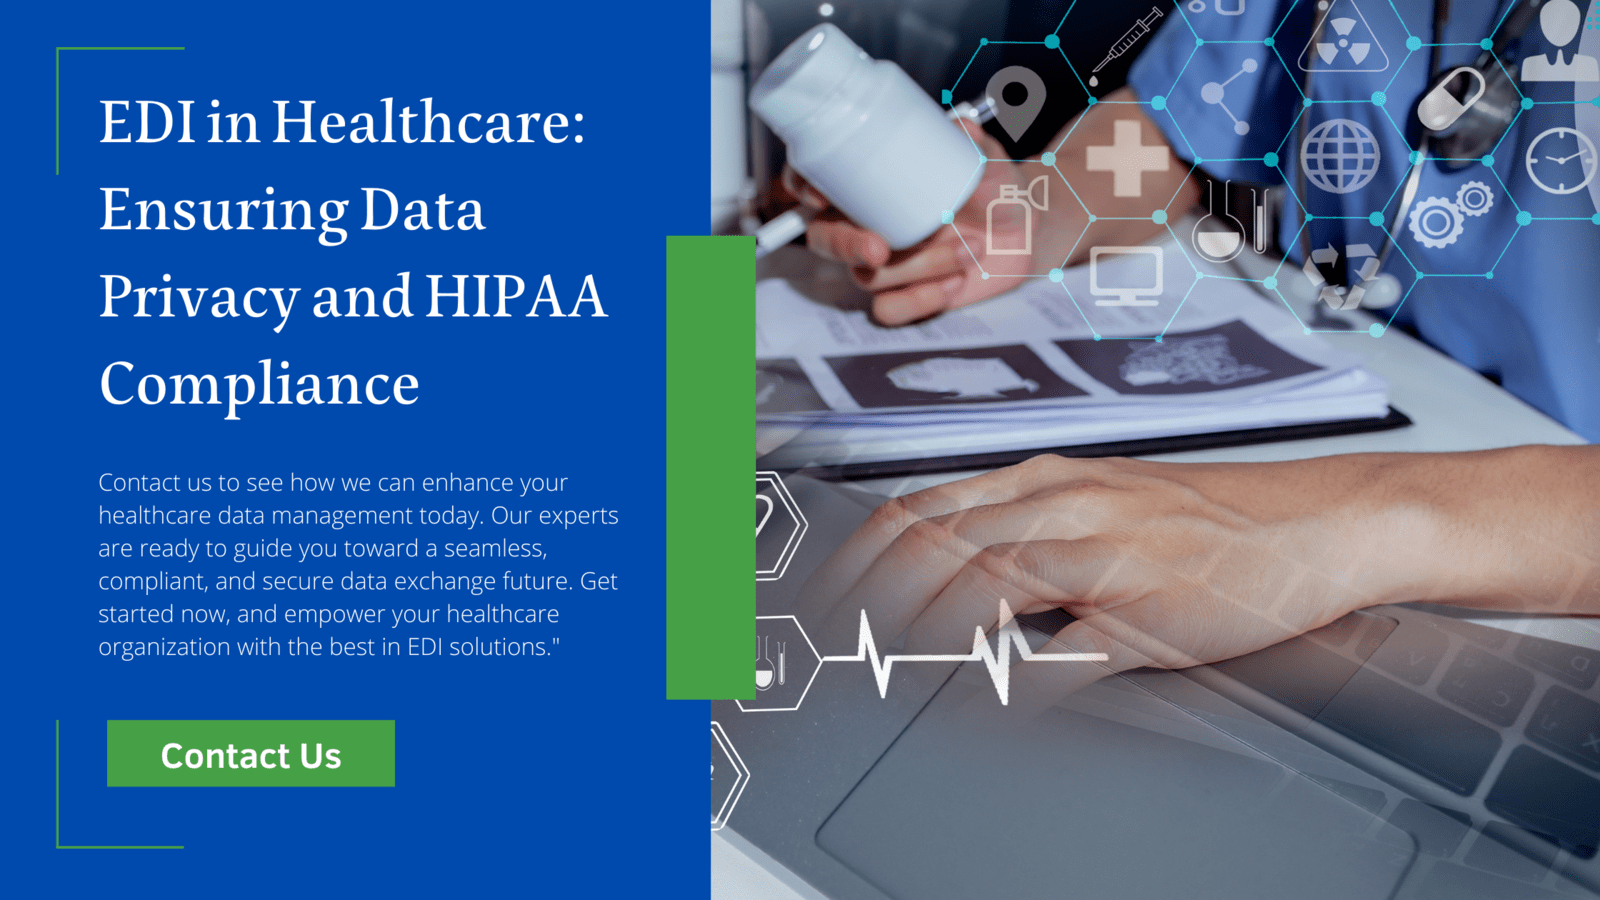  EDI in Healthcare: Ensuring Data Privacy and HIPAA Compliance